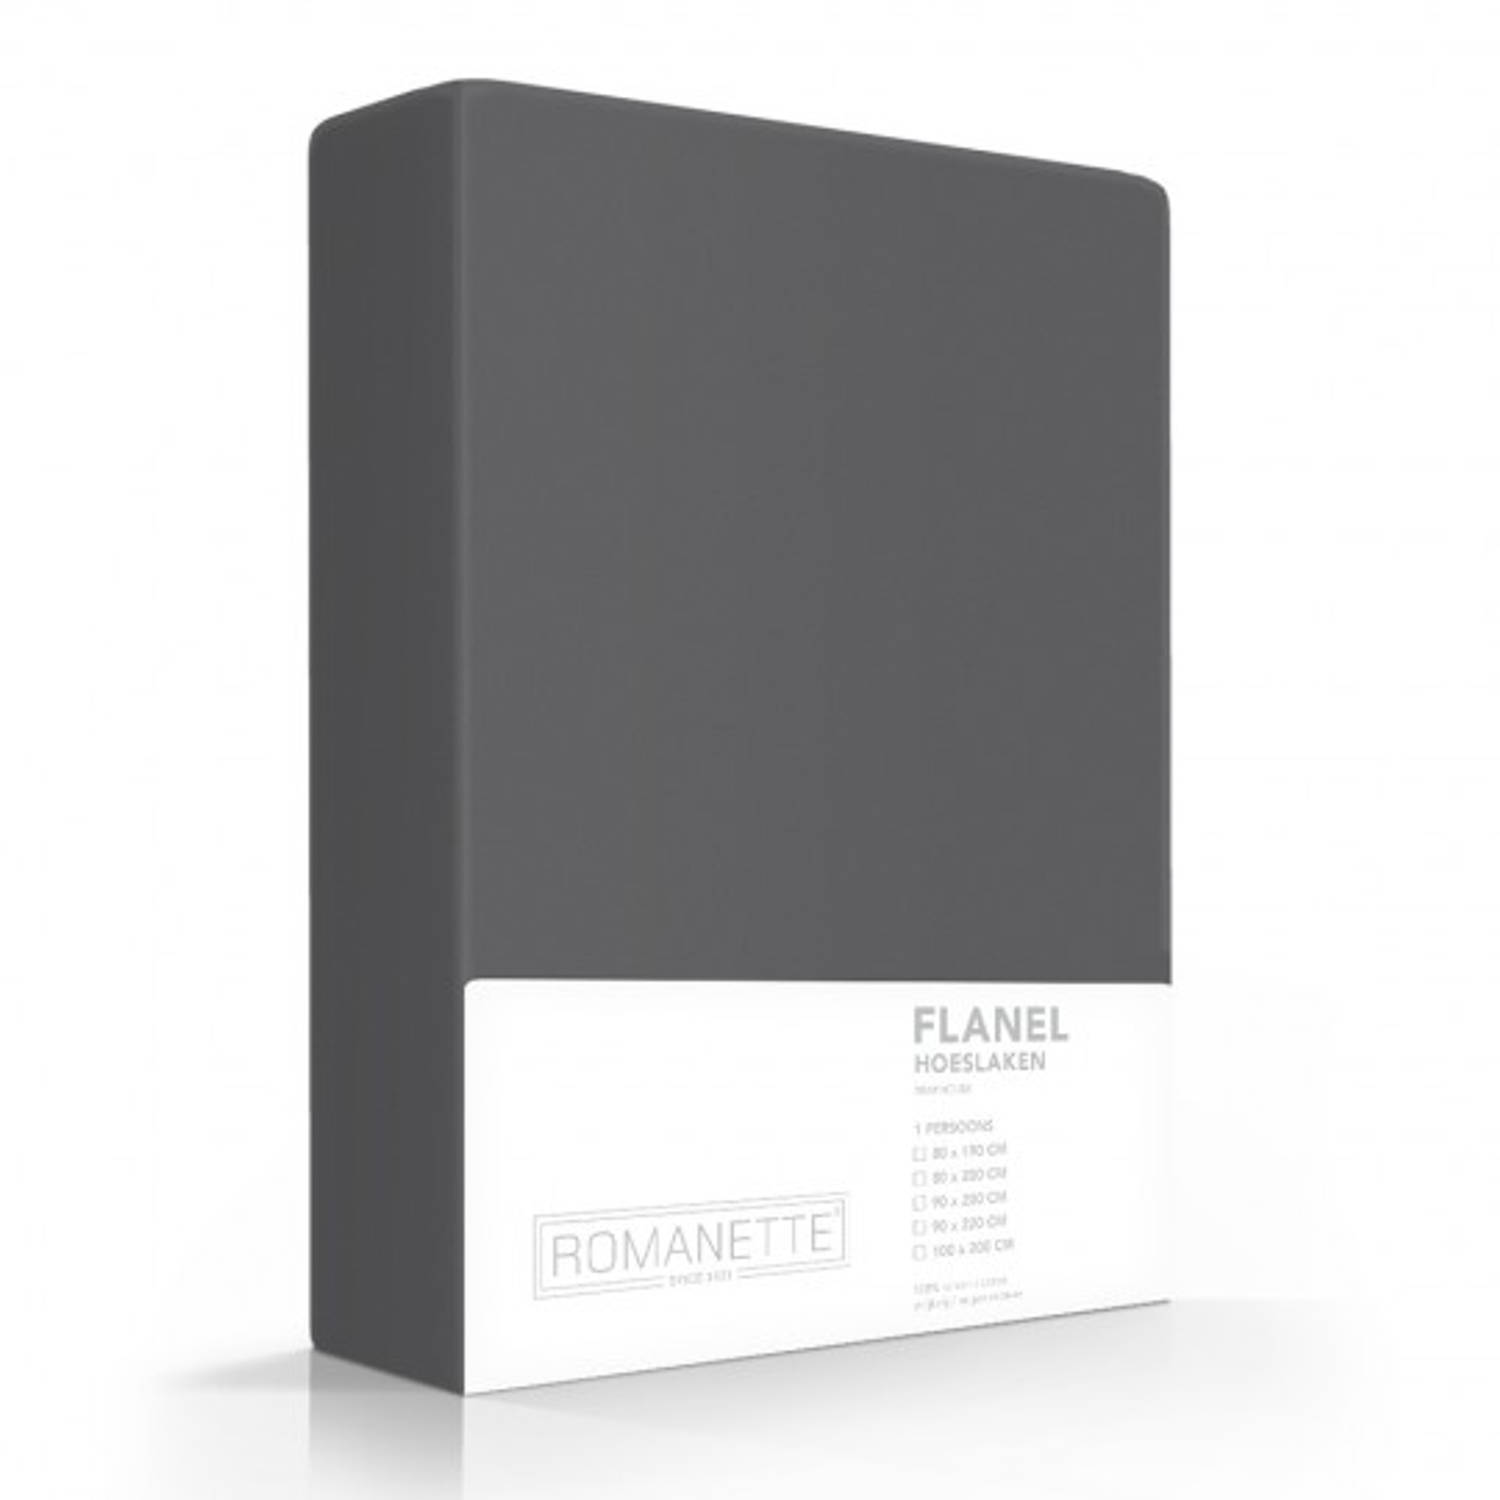 Flanellen Hoeslaken Antraciet Romanette-160 X 200 Cm